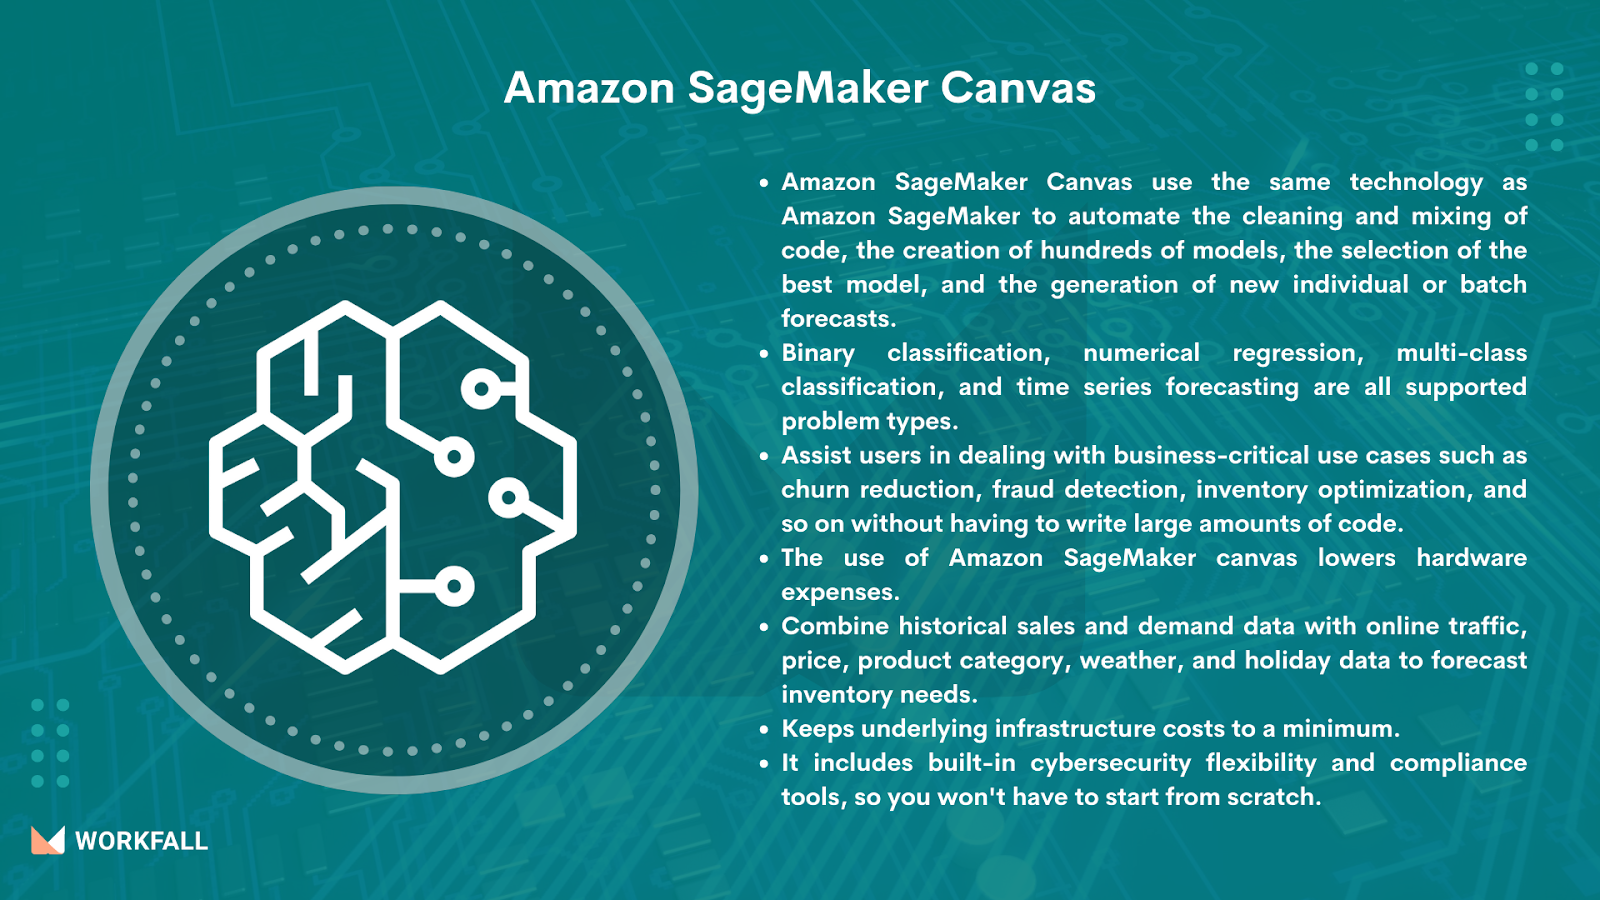 Amazon SageMaker Canvas